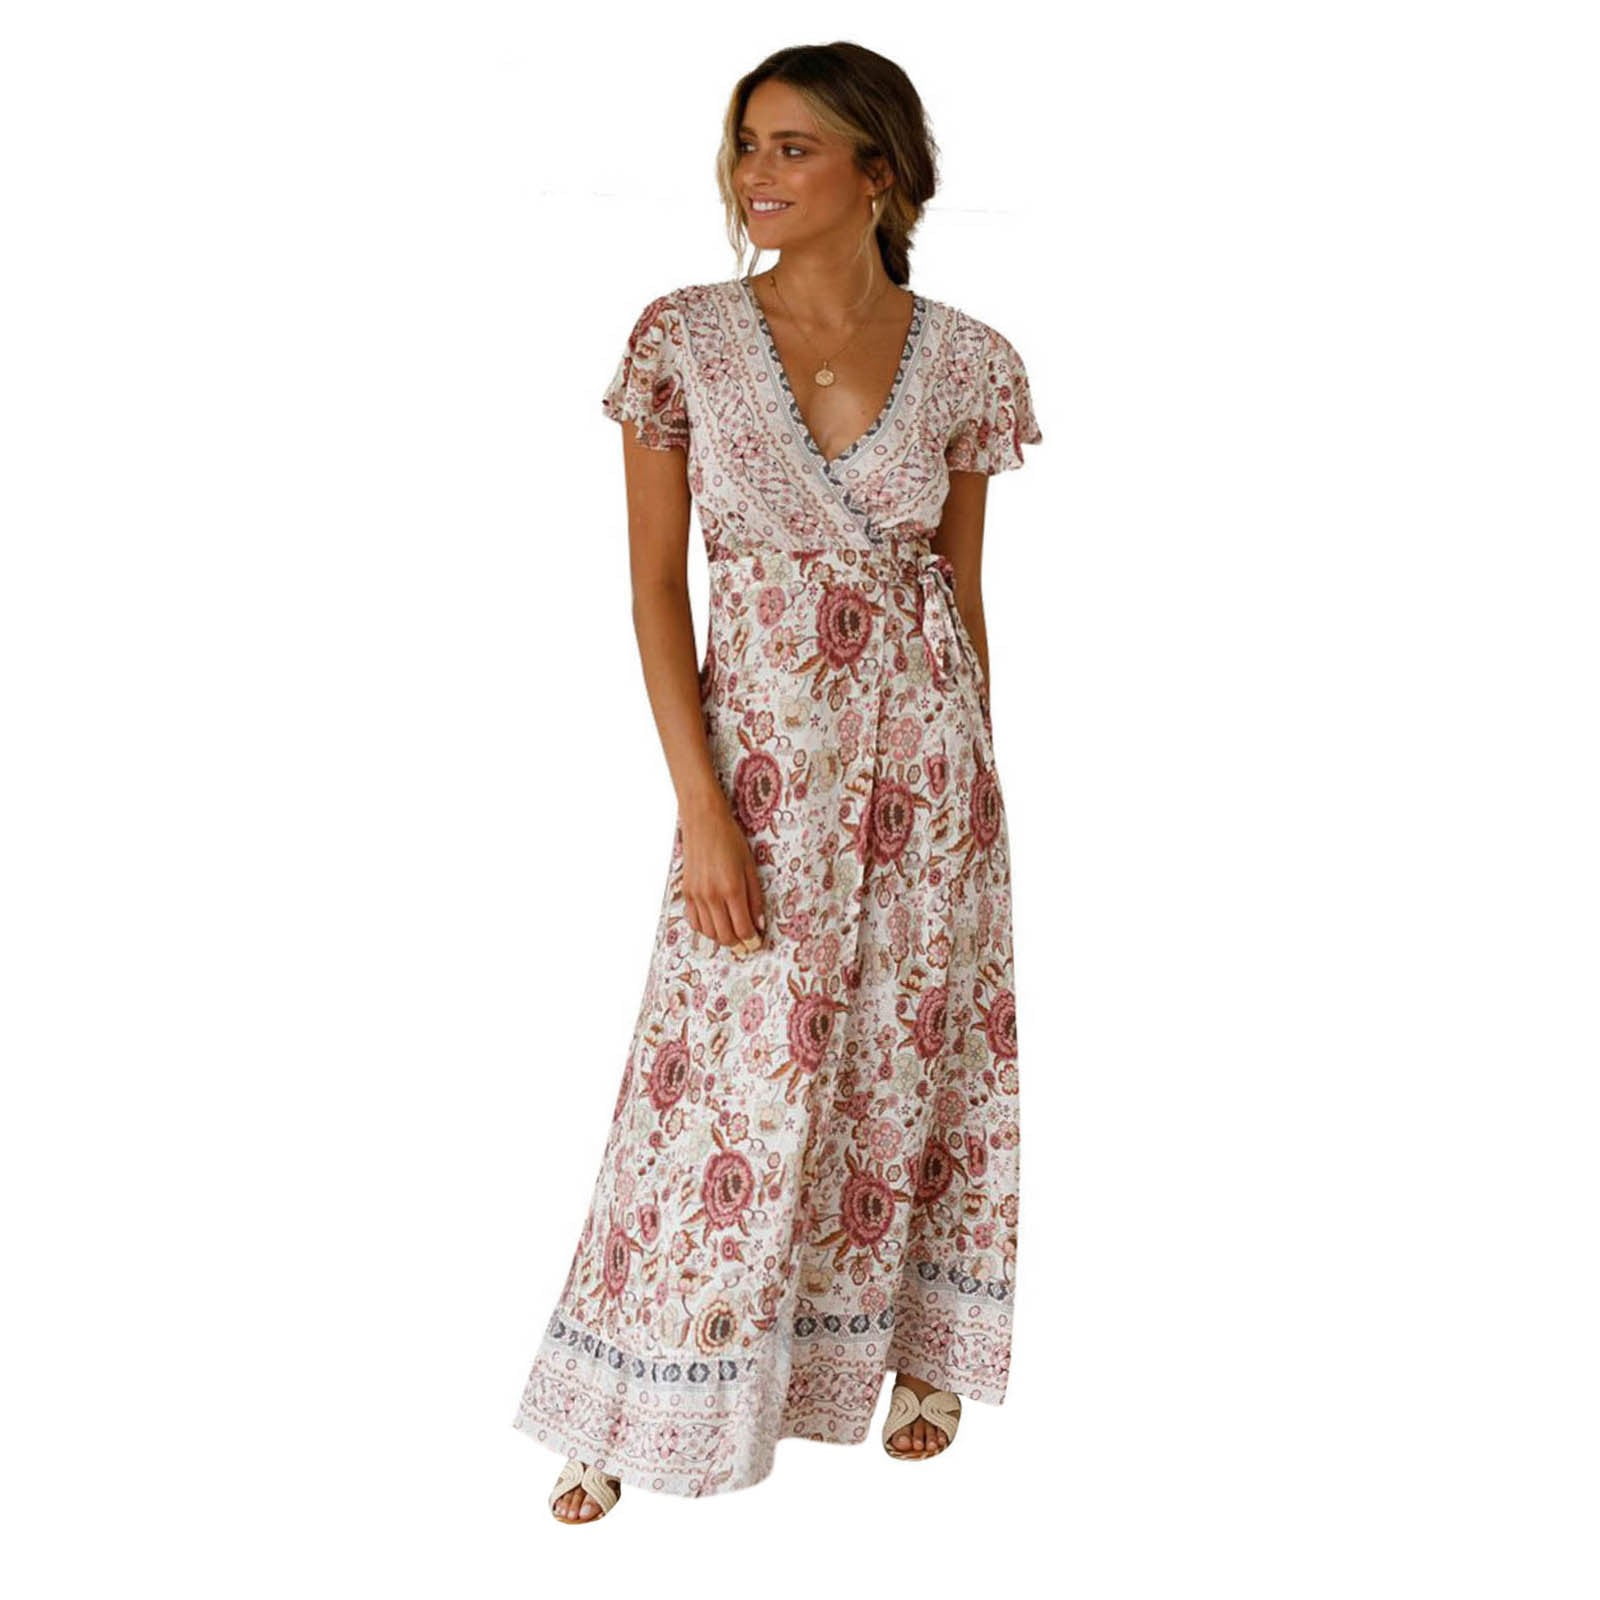 LANISEN Womens Summer Boho Floral Swing Beach Mini Dress Casual Short Sleeve Backless Ruffle A Line Dress